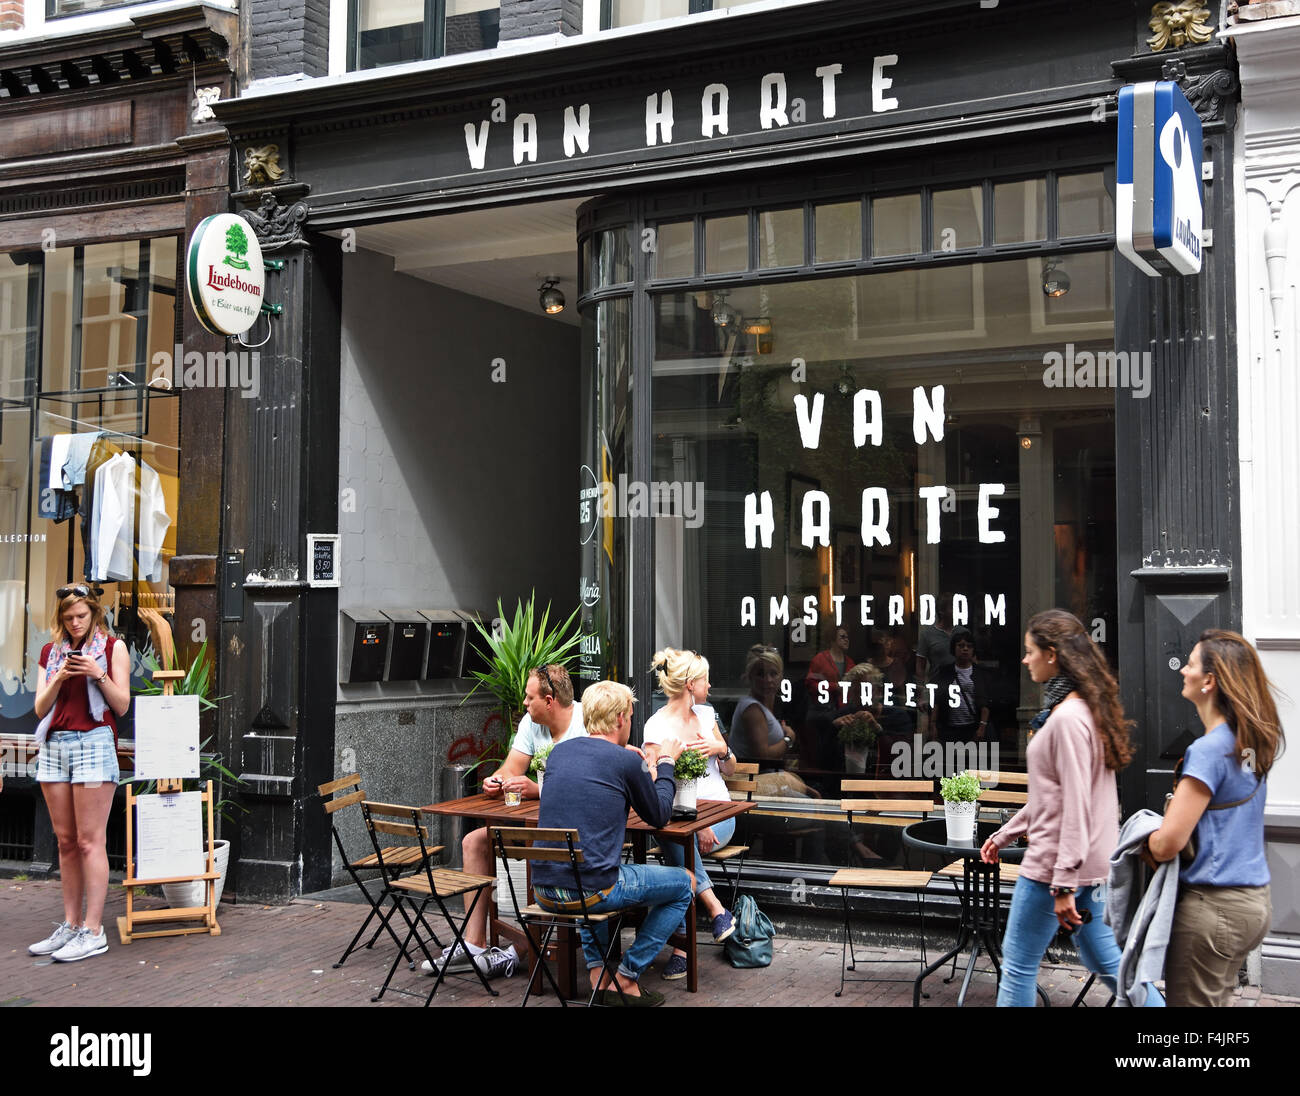 Van Harte - People shopping  Small bar restaurant  Shop ( de negen straatjes - nine little streets )  Jordaan quarter of Amsterdam The Netherlands Stock Photo